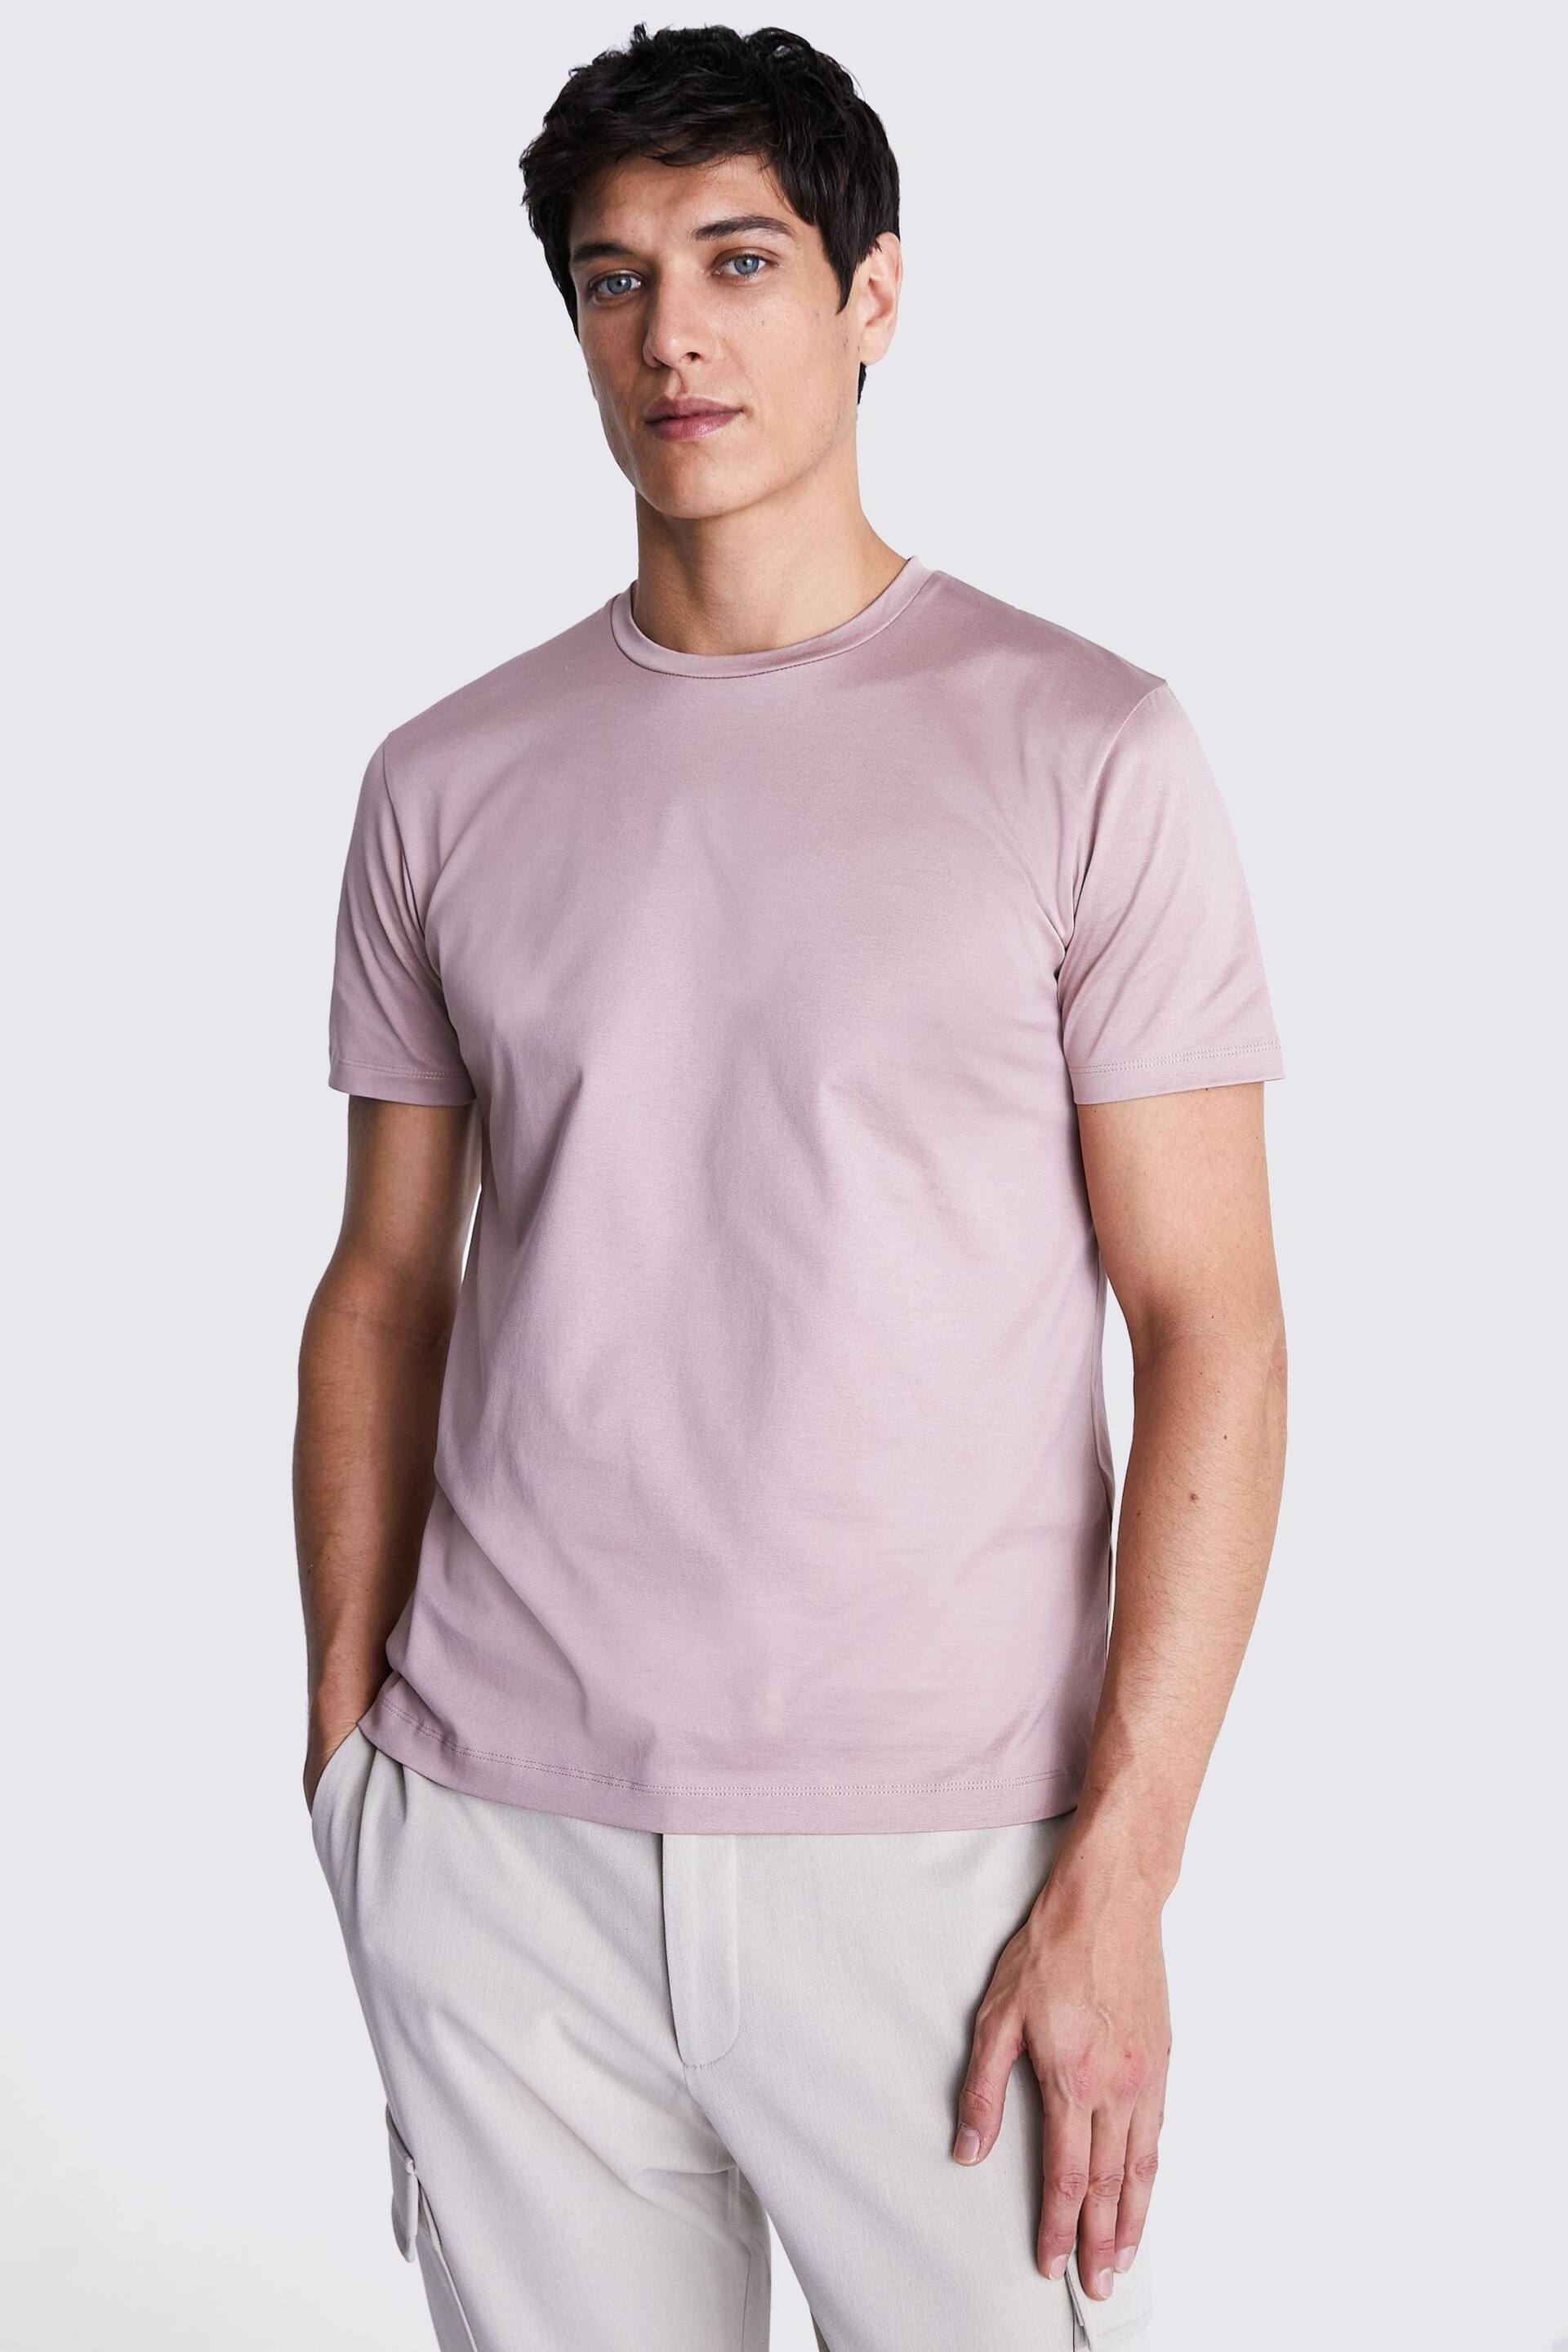 MOSS Pink Mercerised Crew Neck T-Shirt - Image 1 of 3